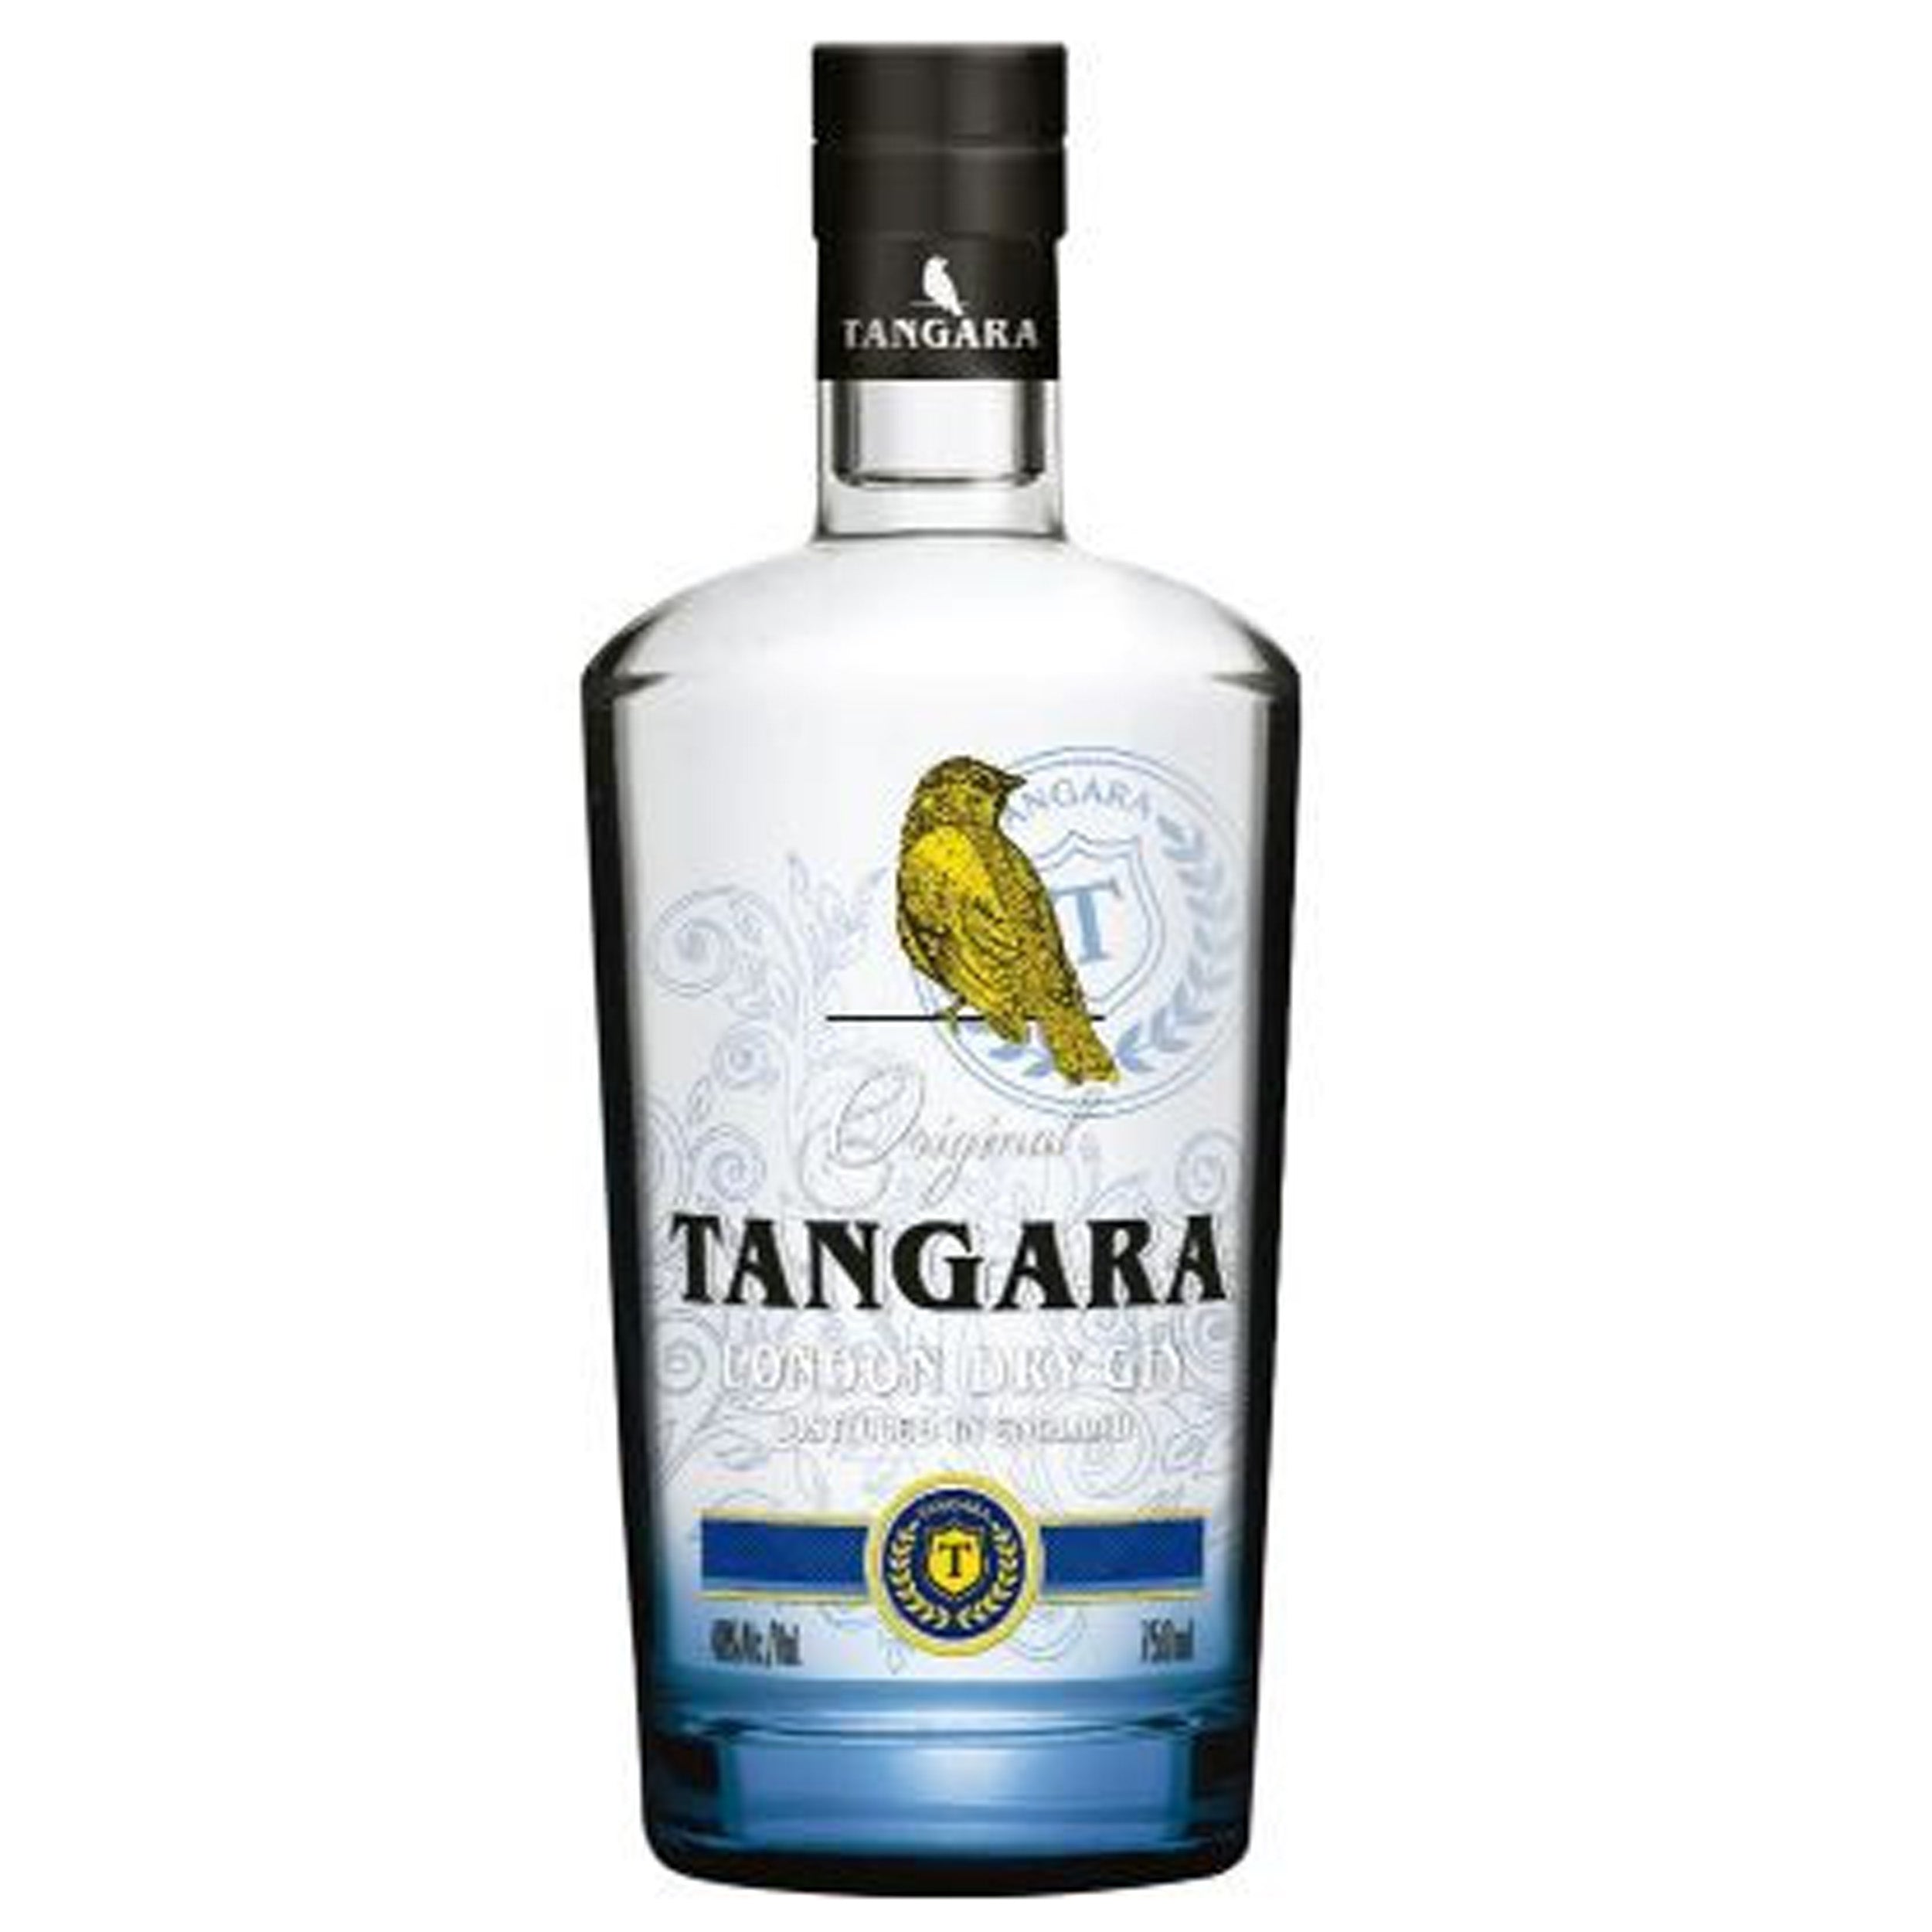 Tangara London Dry Gin